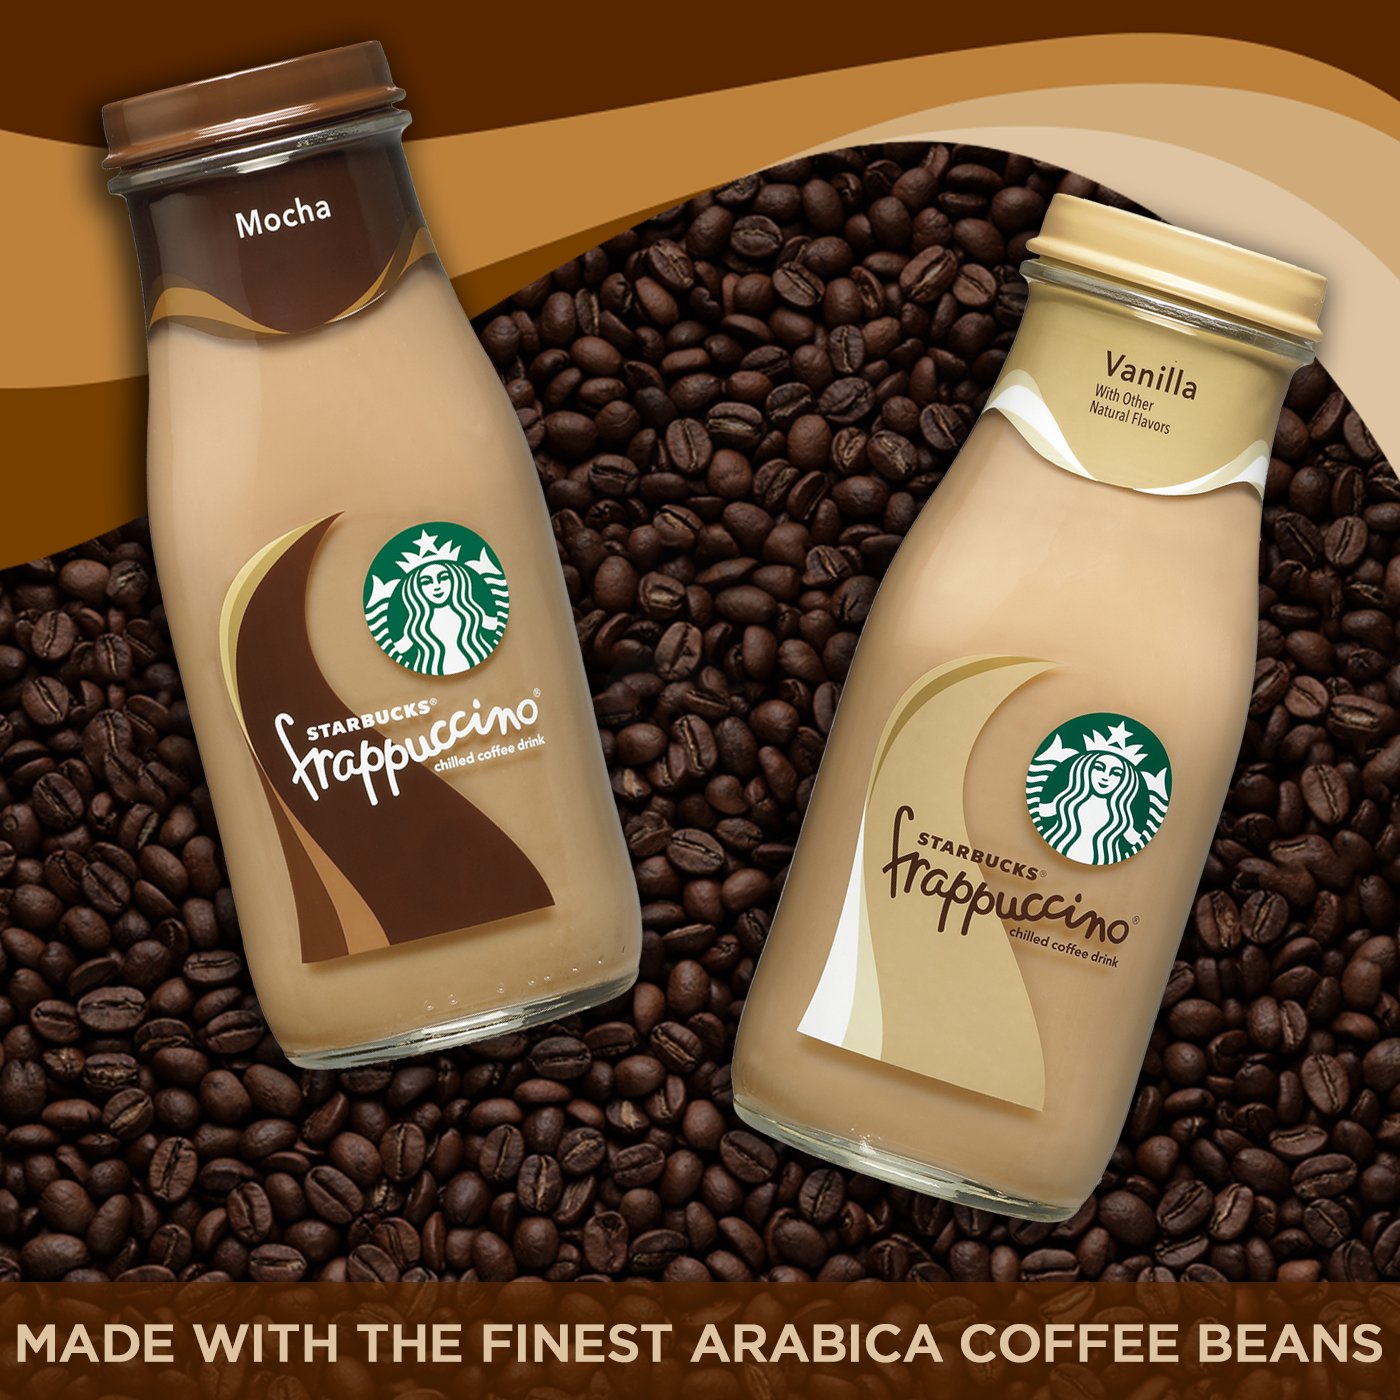 Starbucks Frappuccino, Coffee, 9.5 fl oz (15 Count) Glass Bottles